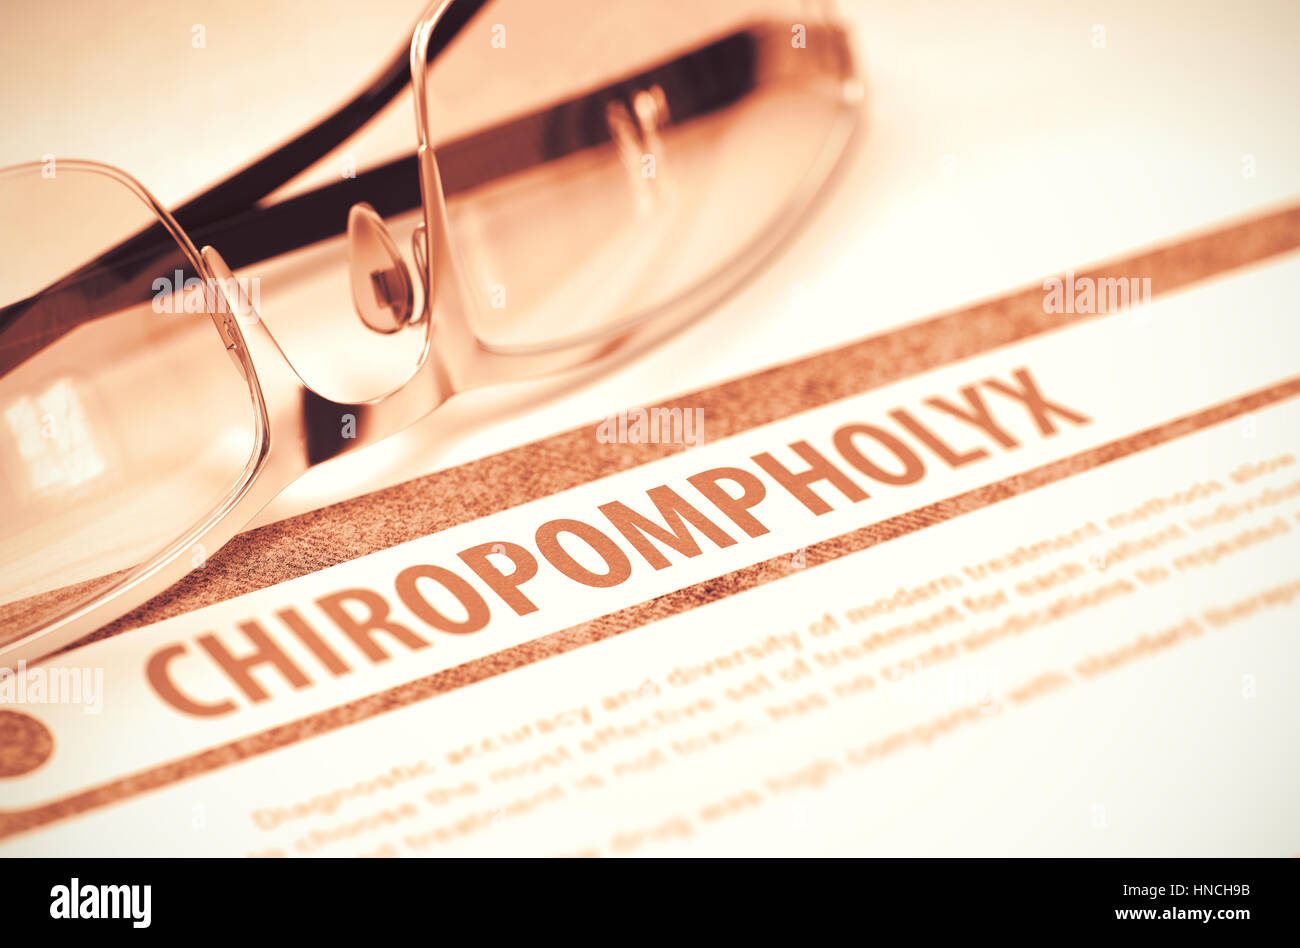 Chiropompholyx. Medicine. 3D Illustration. Stock Photo